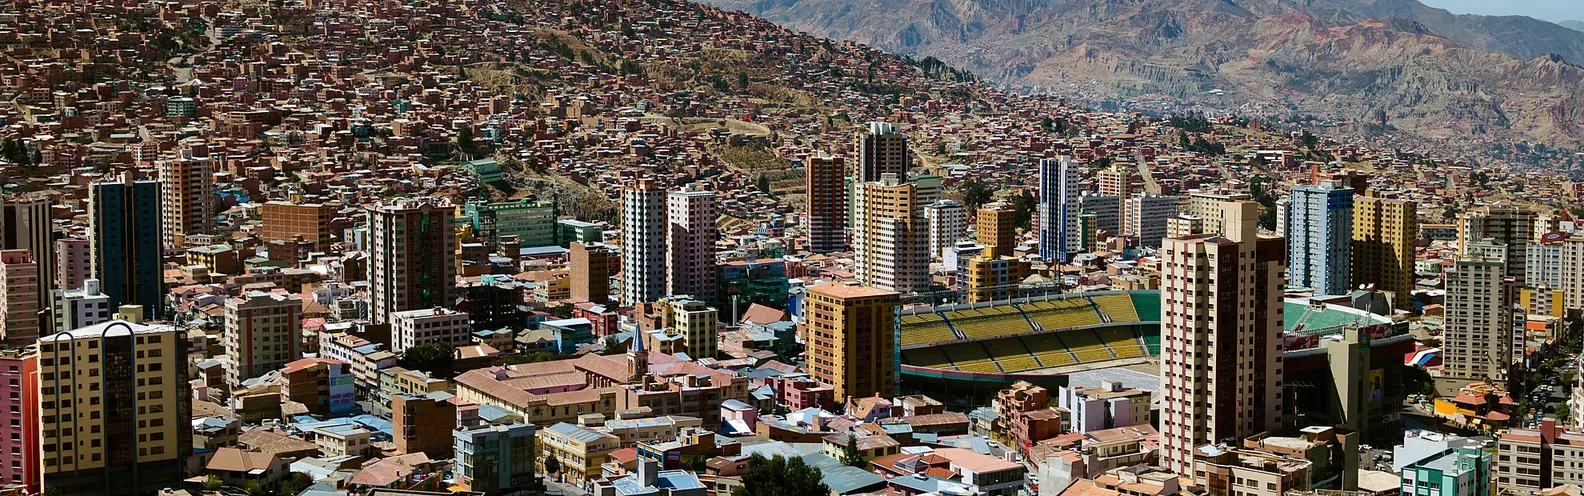 La Paz Region | Bolivia - Rated 6.4